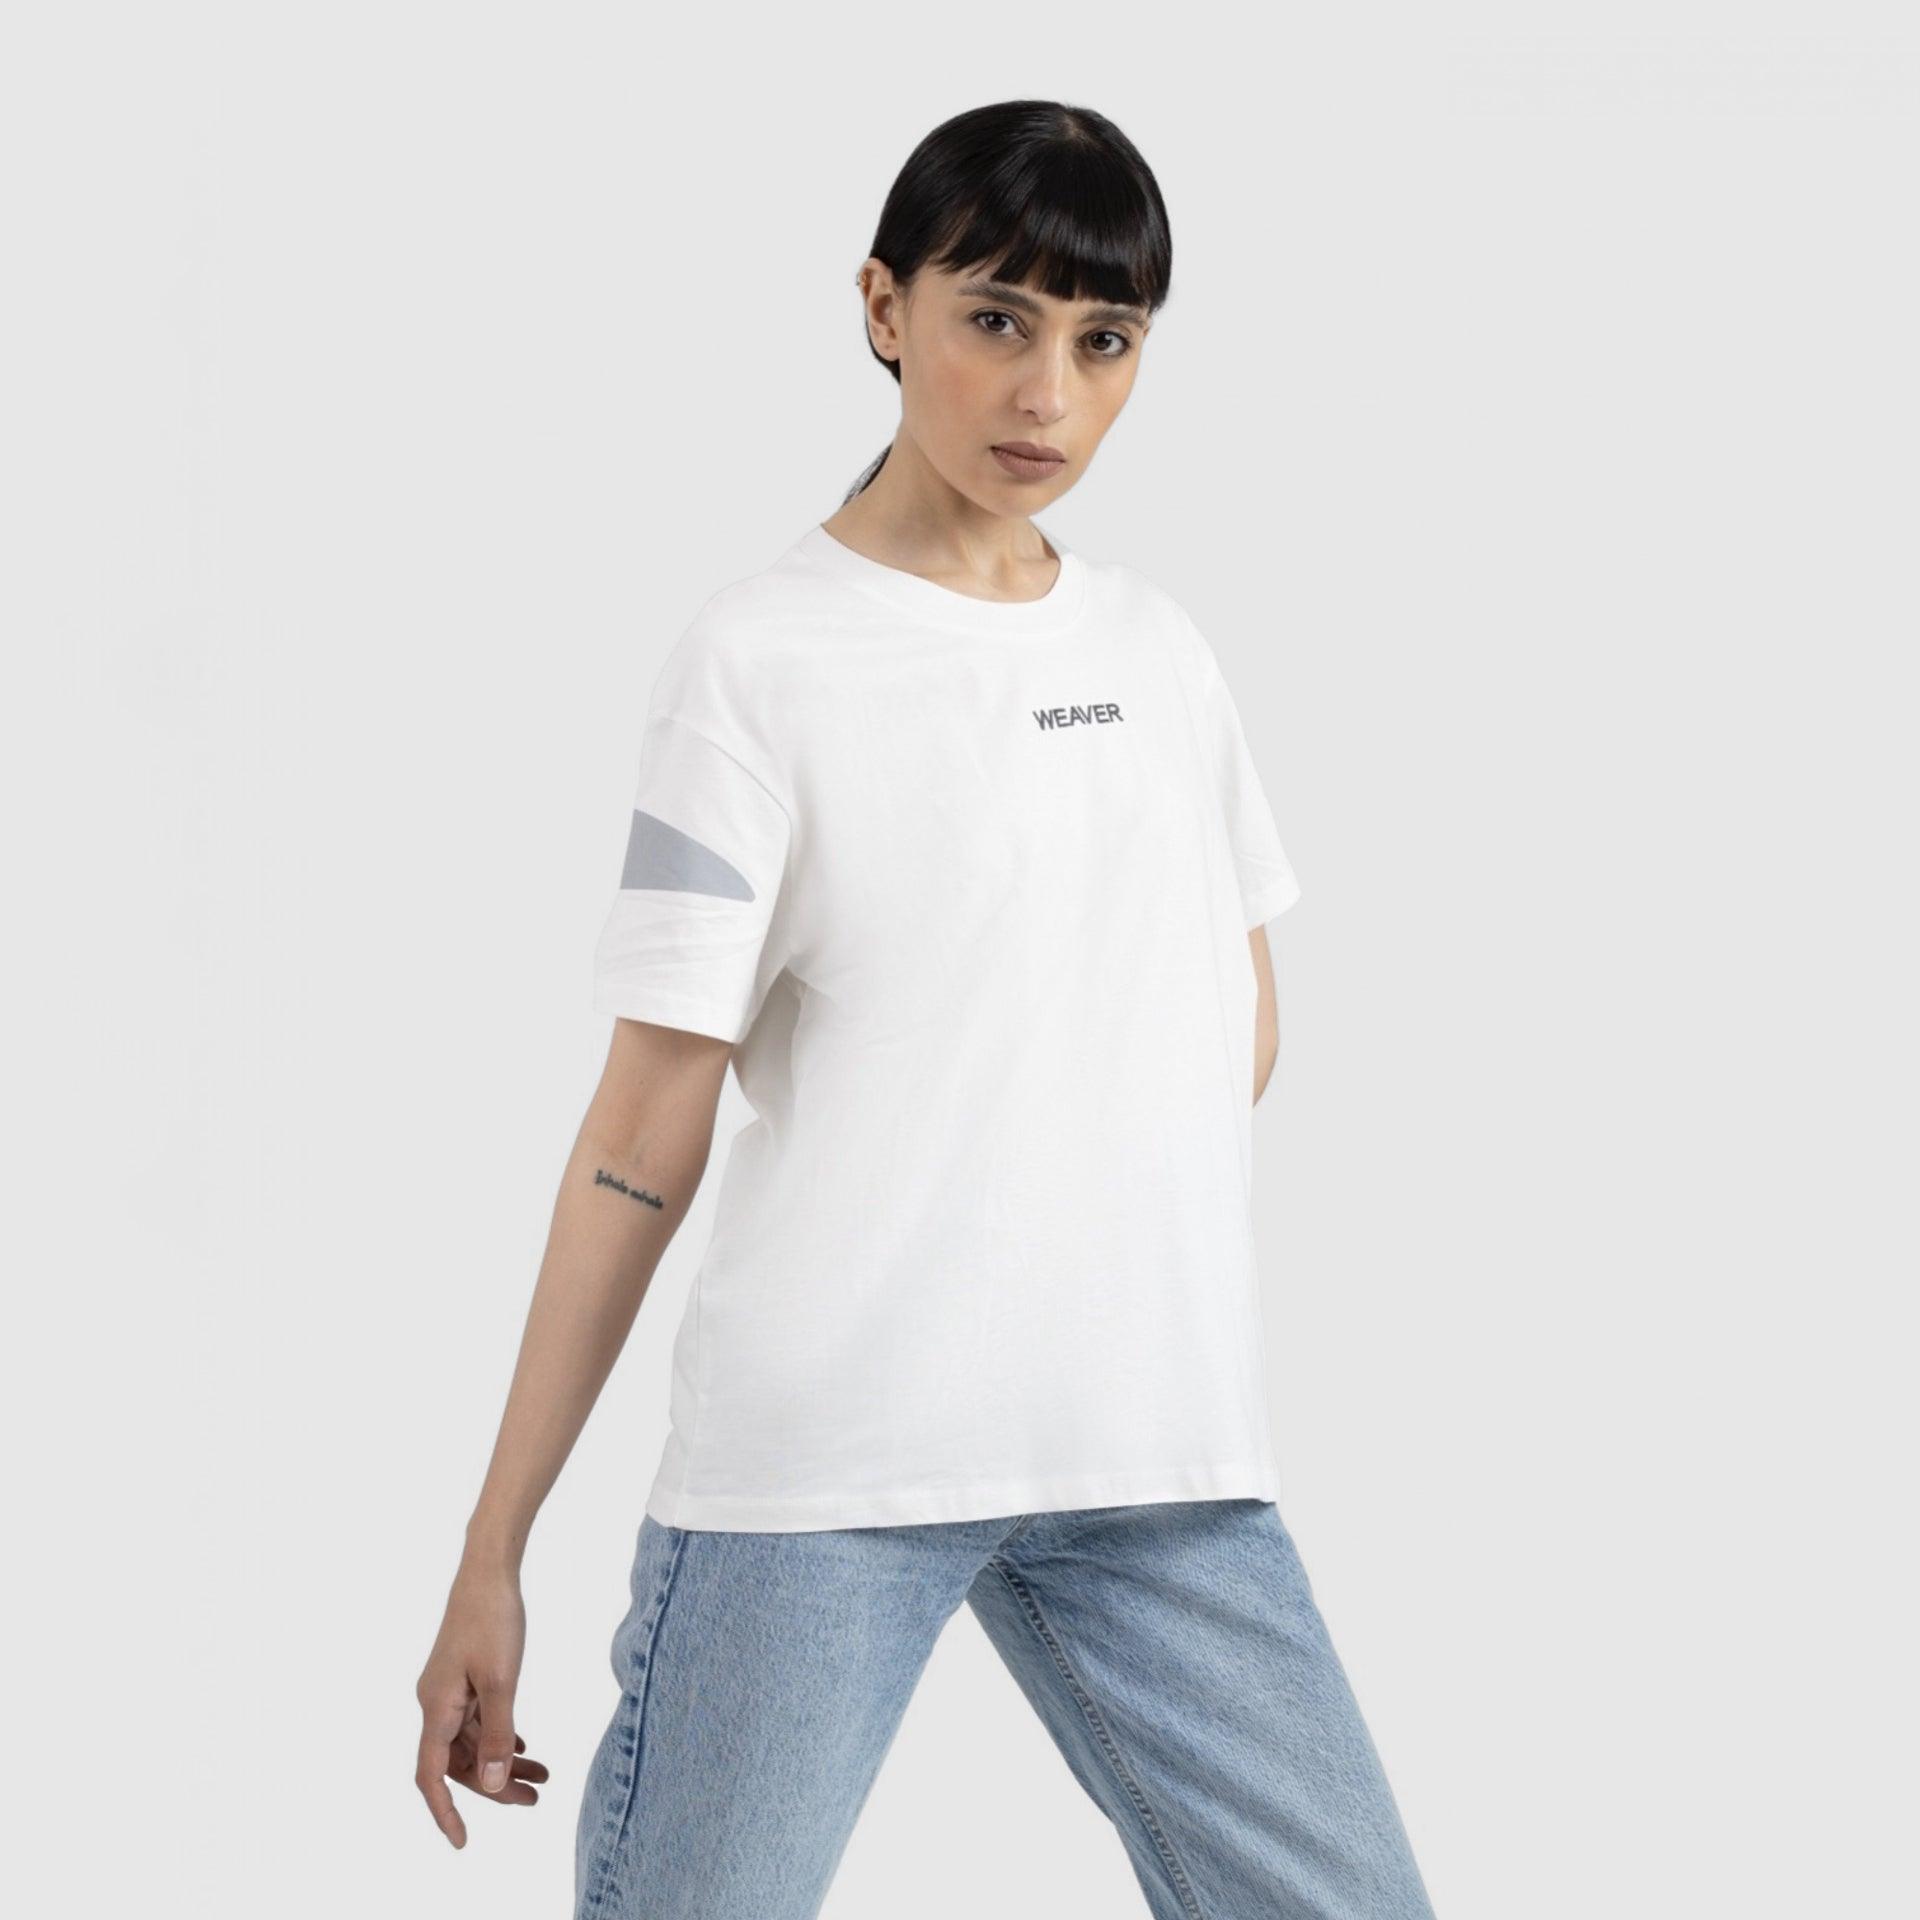 White Scissors T-shirt From Weaver Design - WECRE8